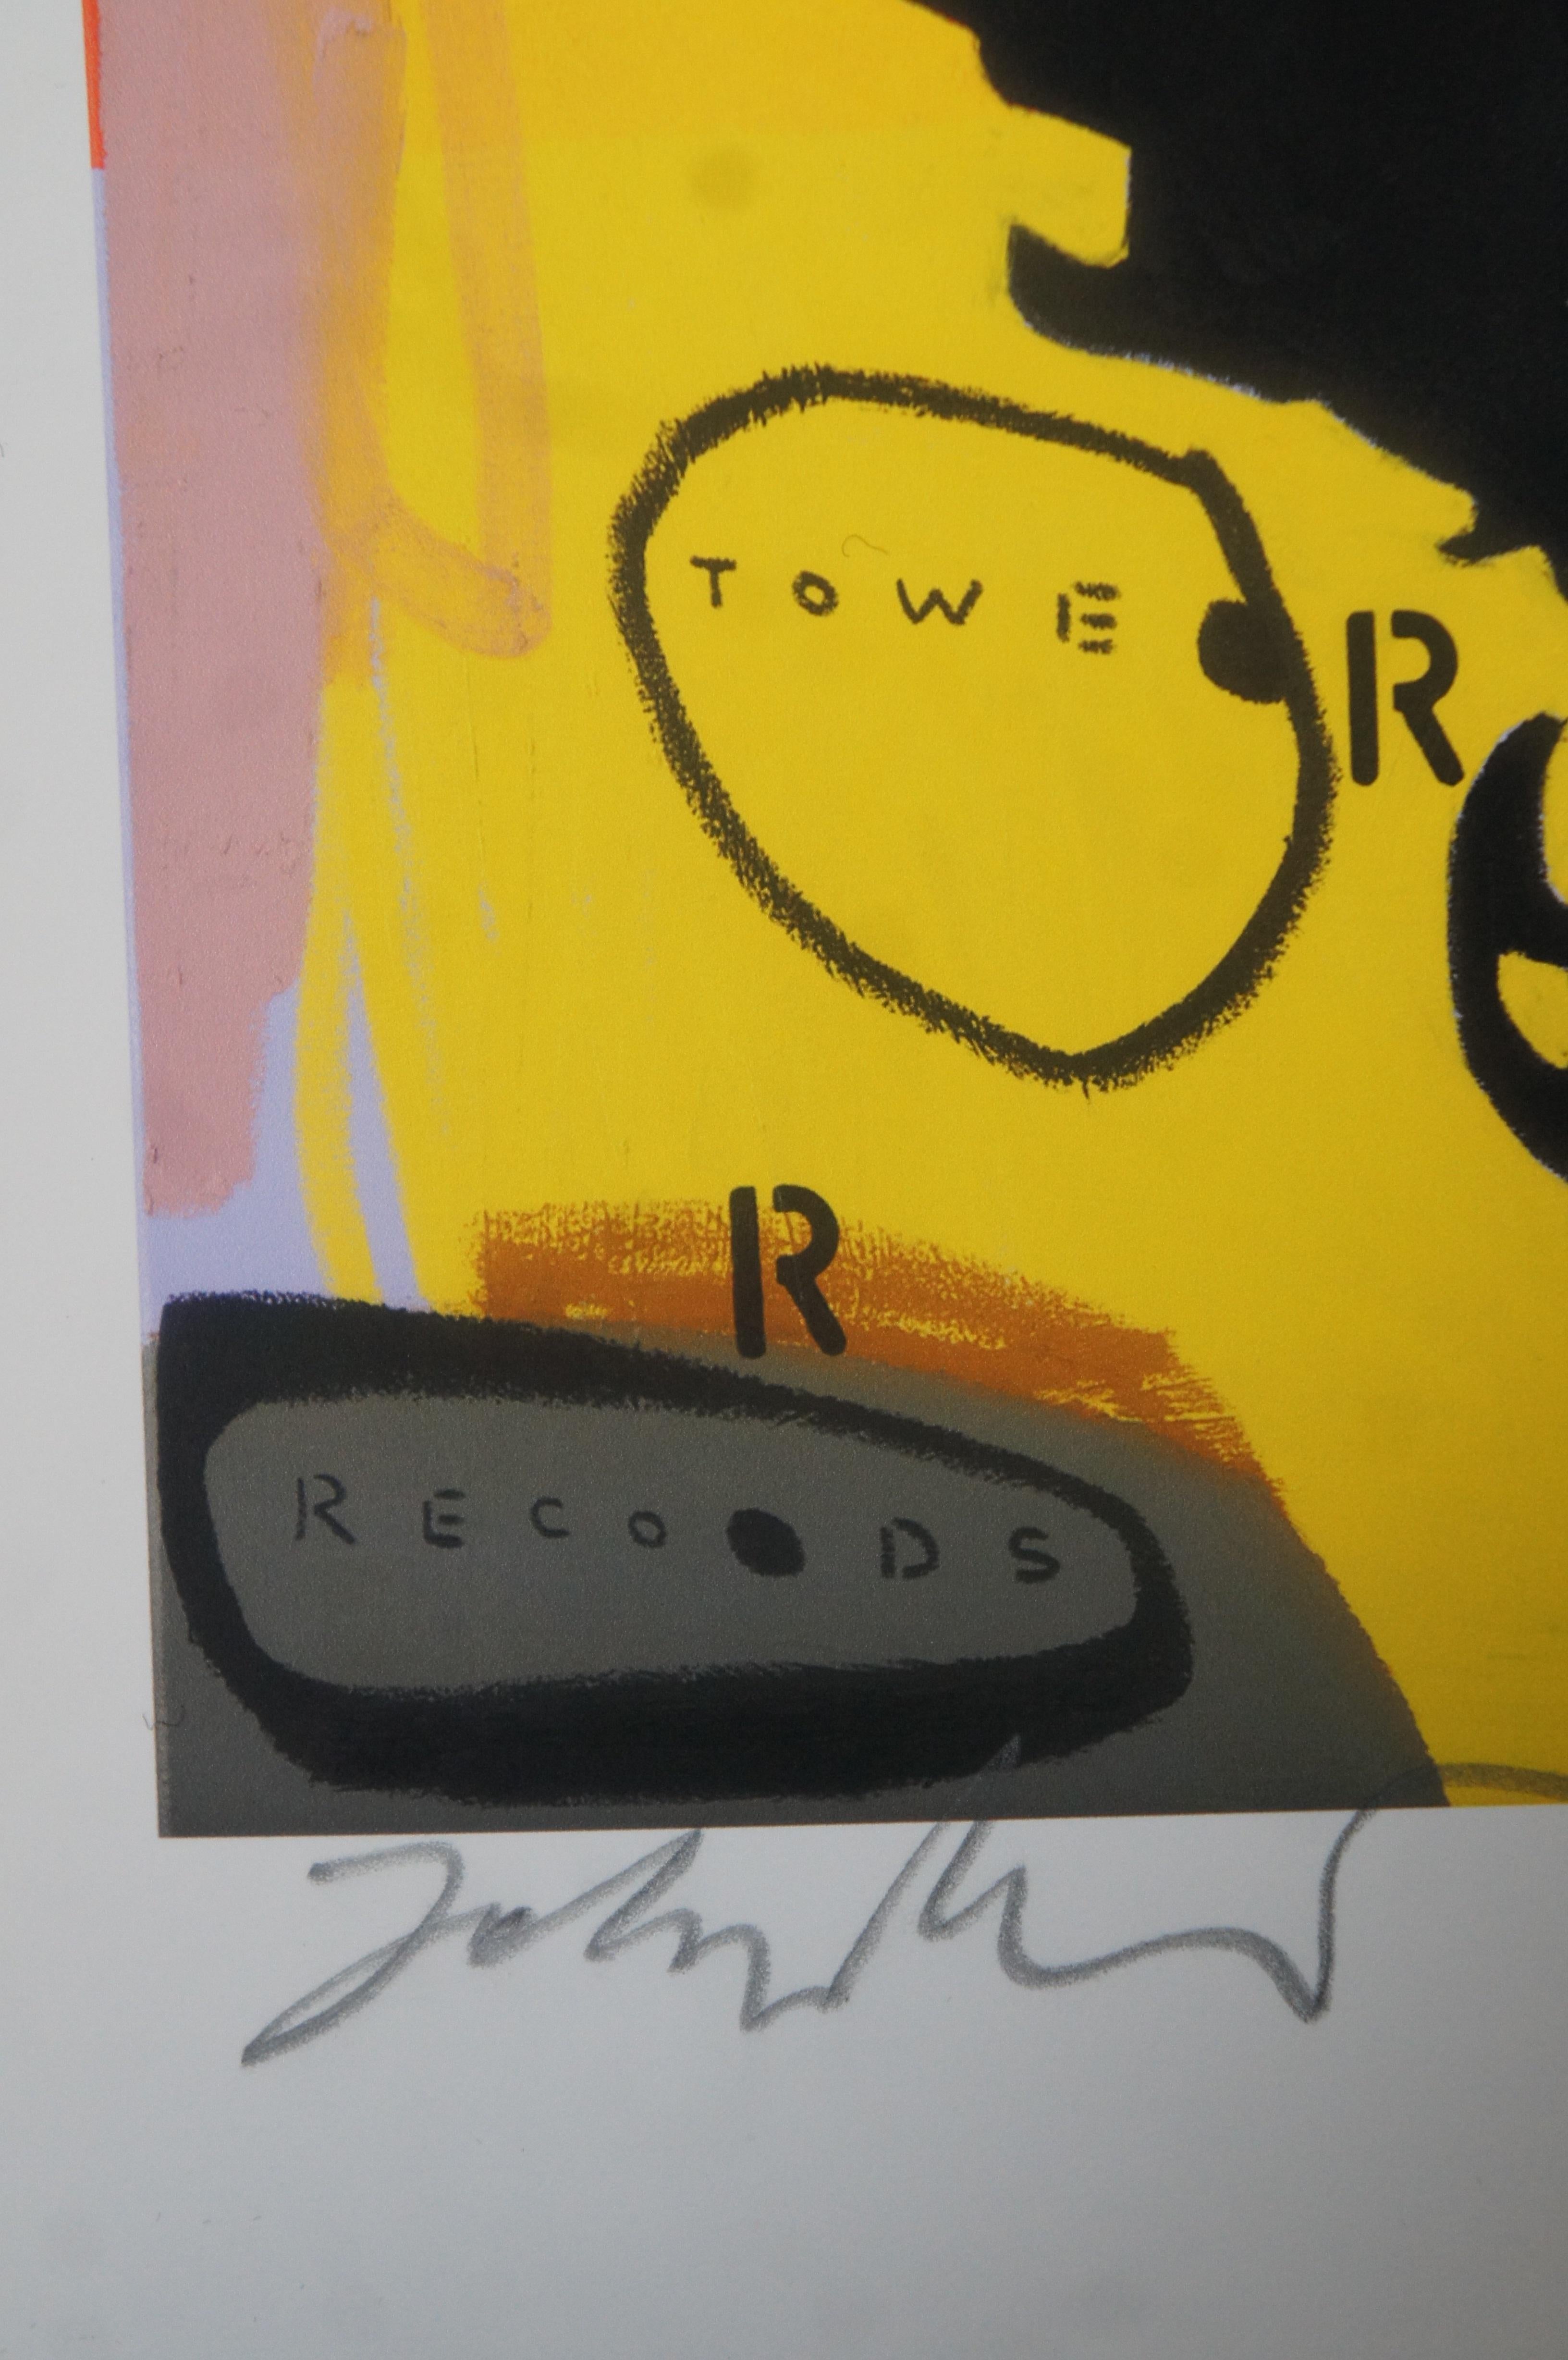 Johnny Romeo Jimmy Hendrix Purple Raze Signed Expressionist Pop Art Print 15